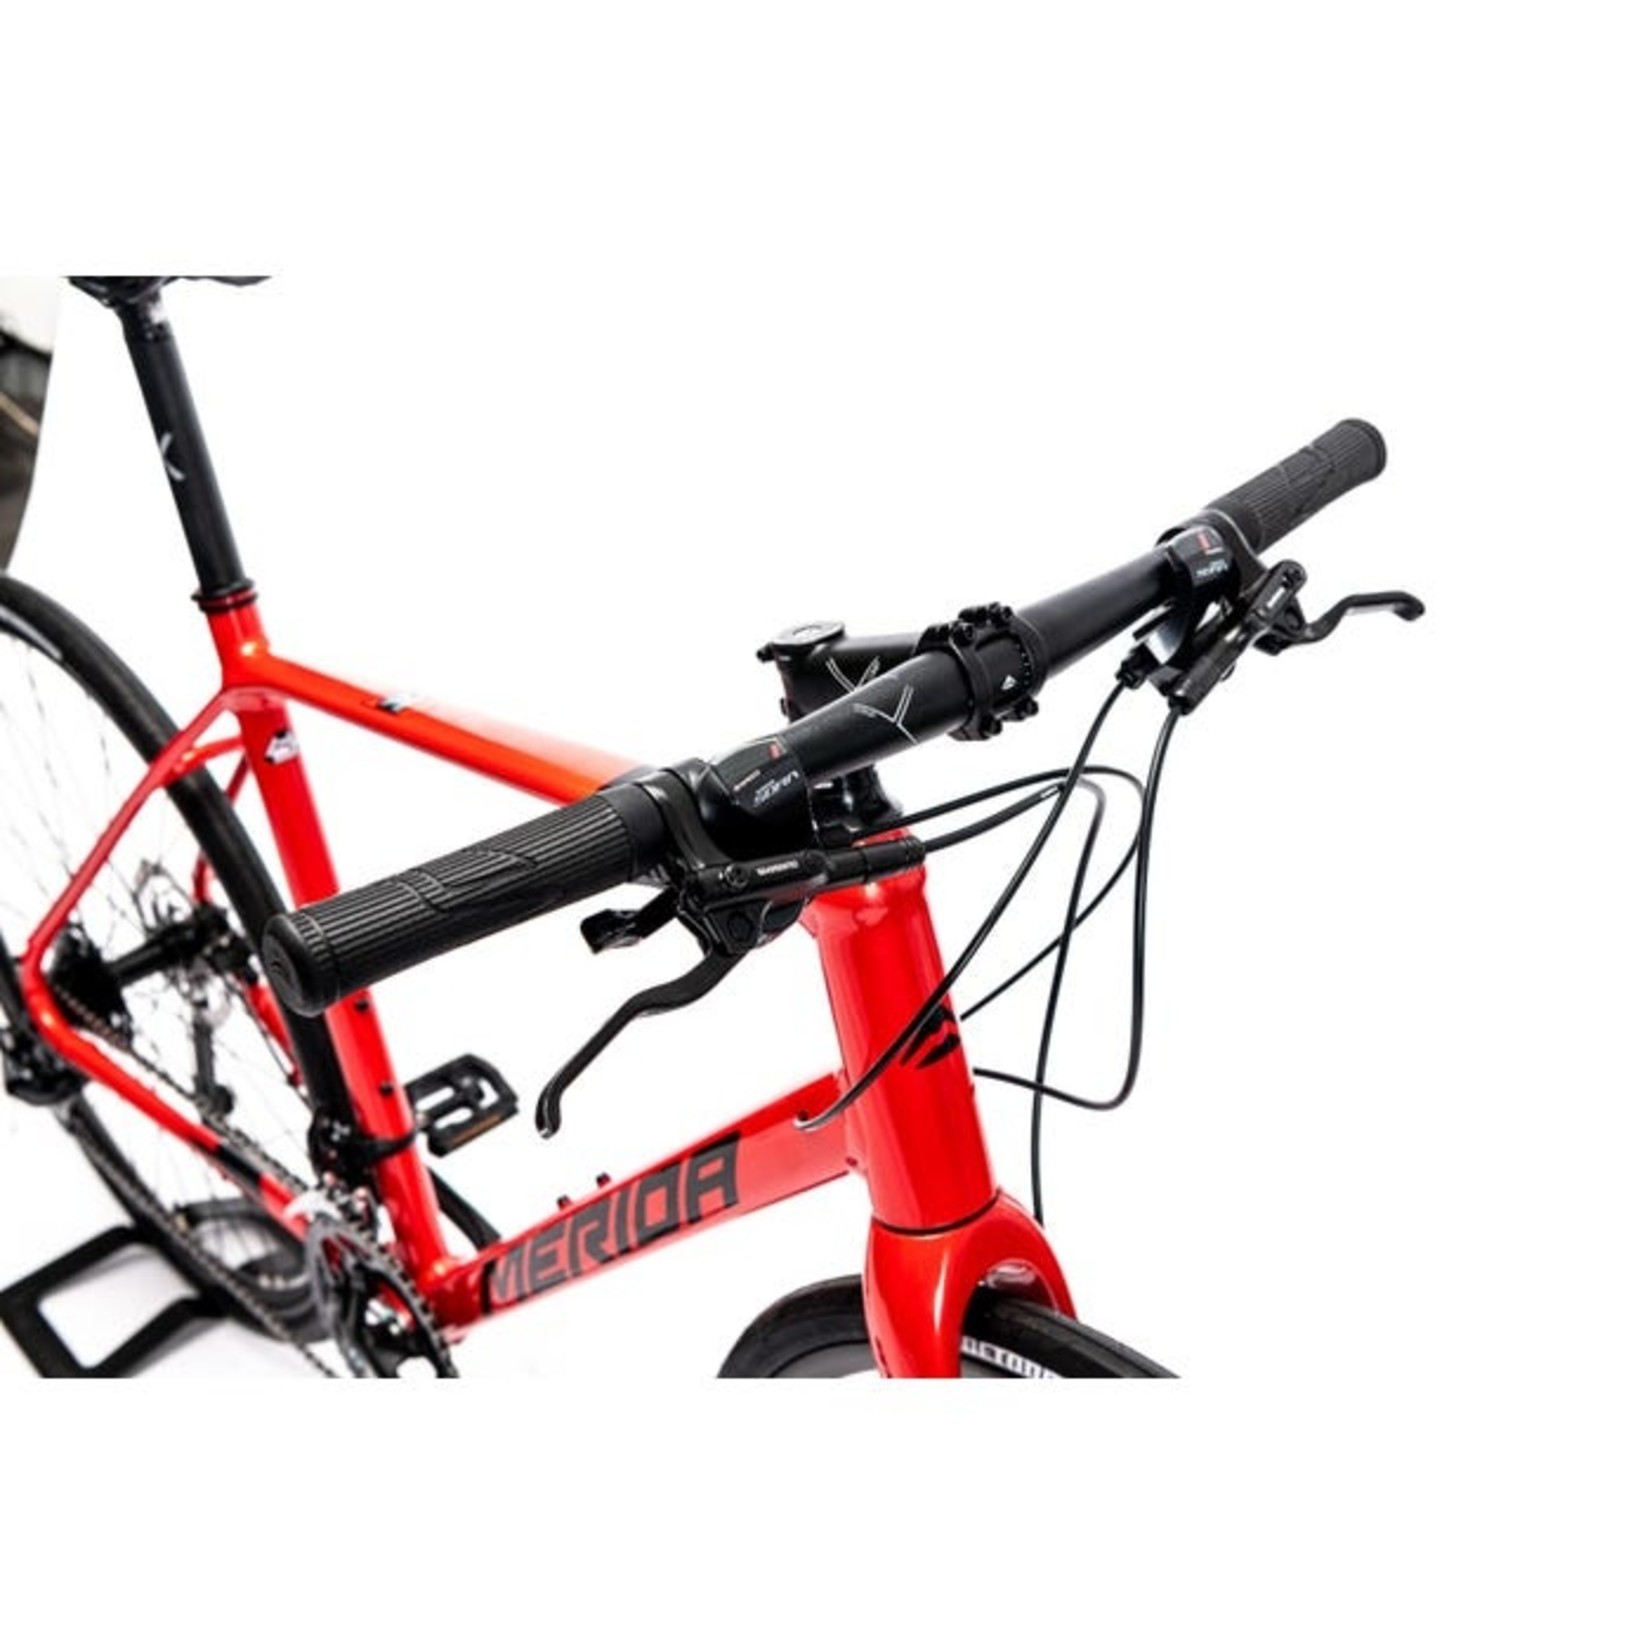 Merida Merida 2021 Speeder 200 Flat Bar Road Bike - Golden Red(Black) - Large